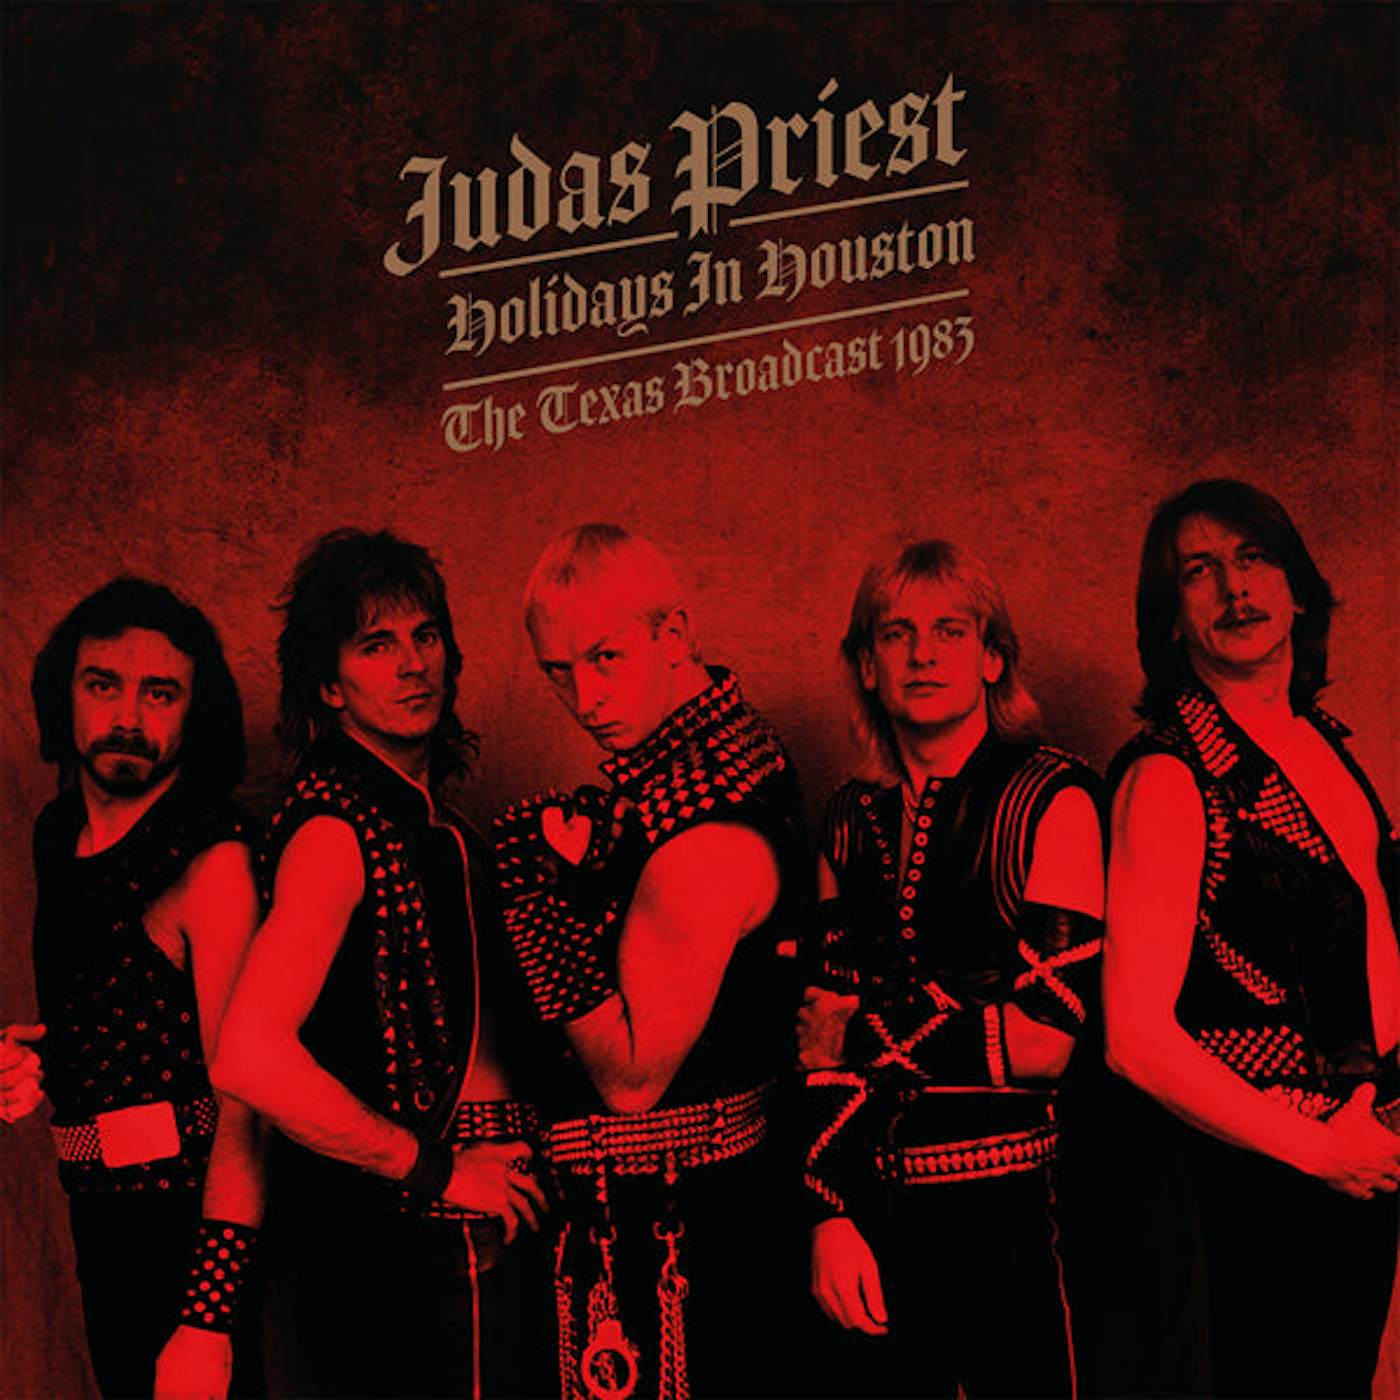 Invincible Shield Standard 2LP – Judas Priest Store